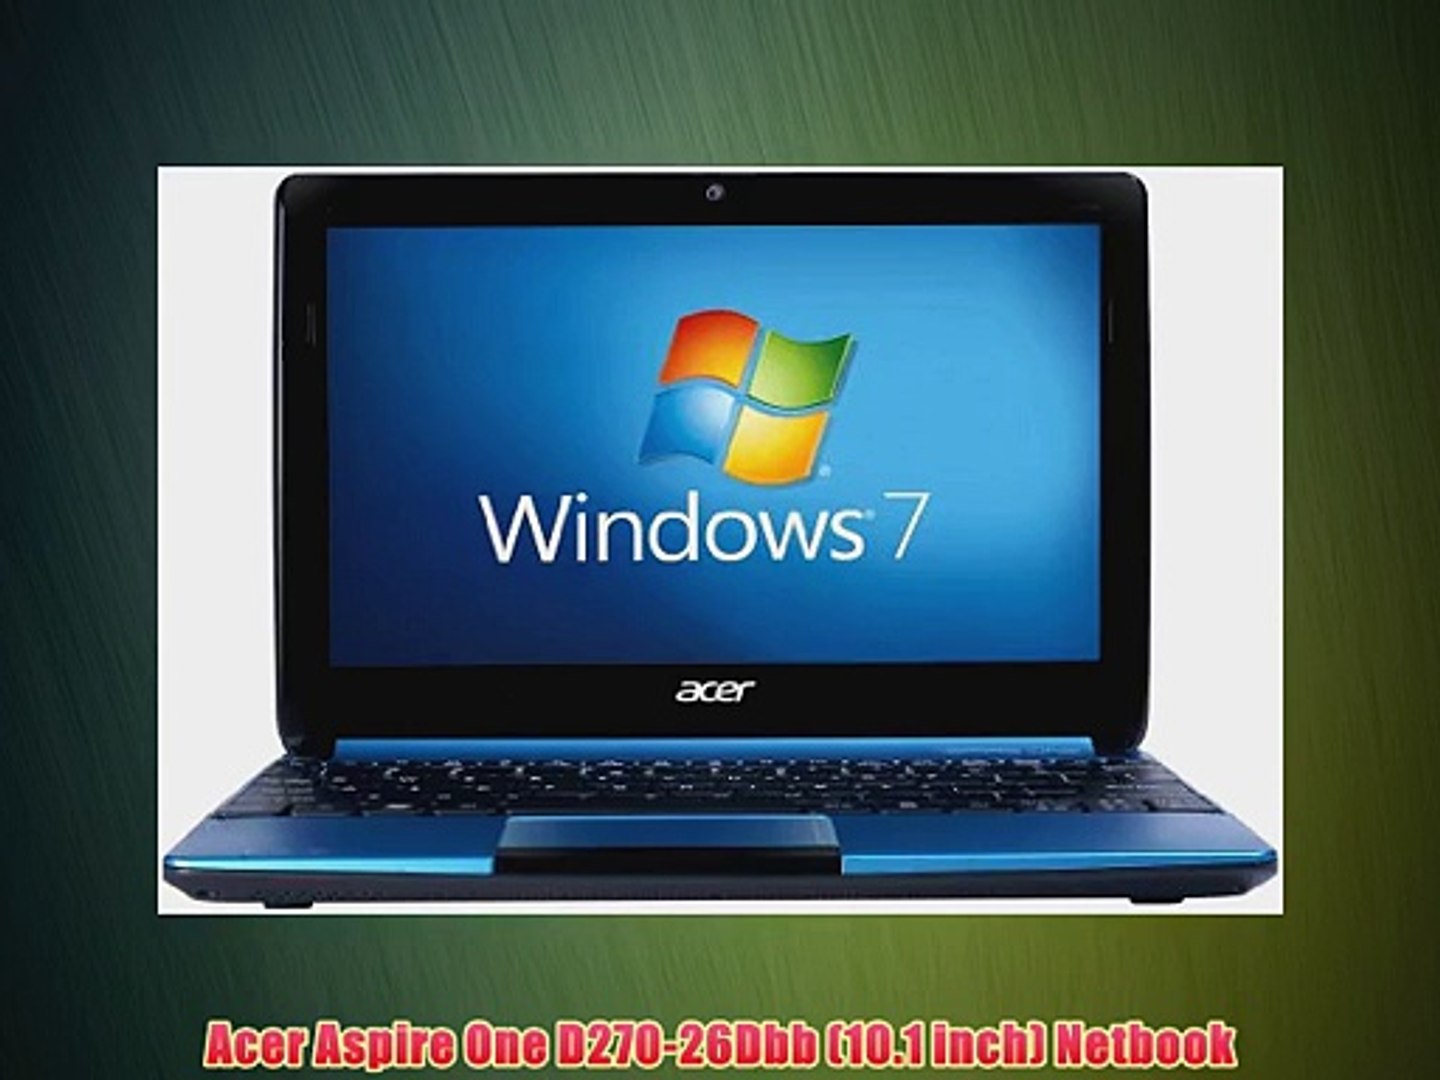 Aspire home. Acer AMD ноутбук. Acer Aspire one 10.1 d270 2 GB 320gb. Barebone Intel Atom n450. Acer 530 BEATSAUDIO.